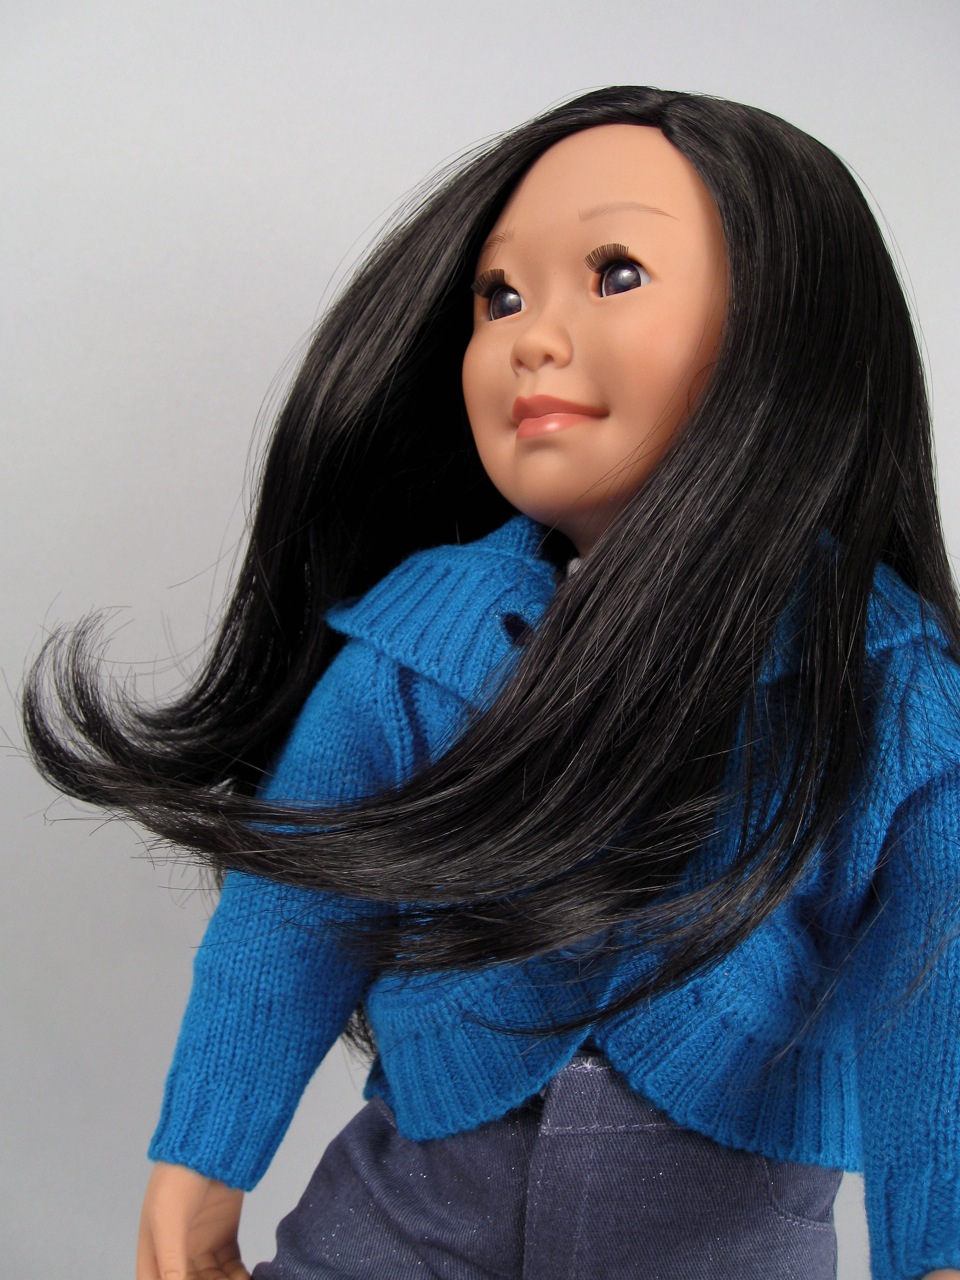 Maplelea Girls "Saila" doll